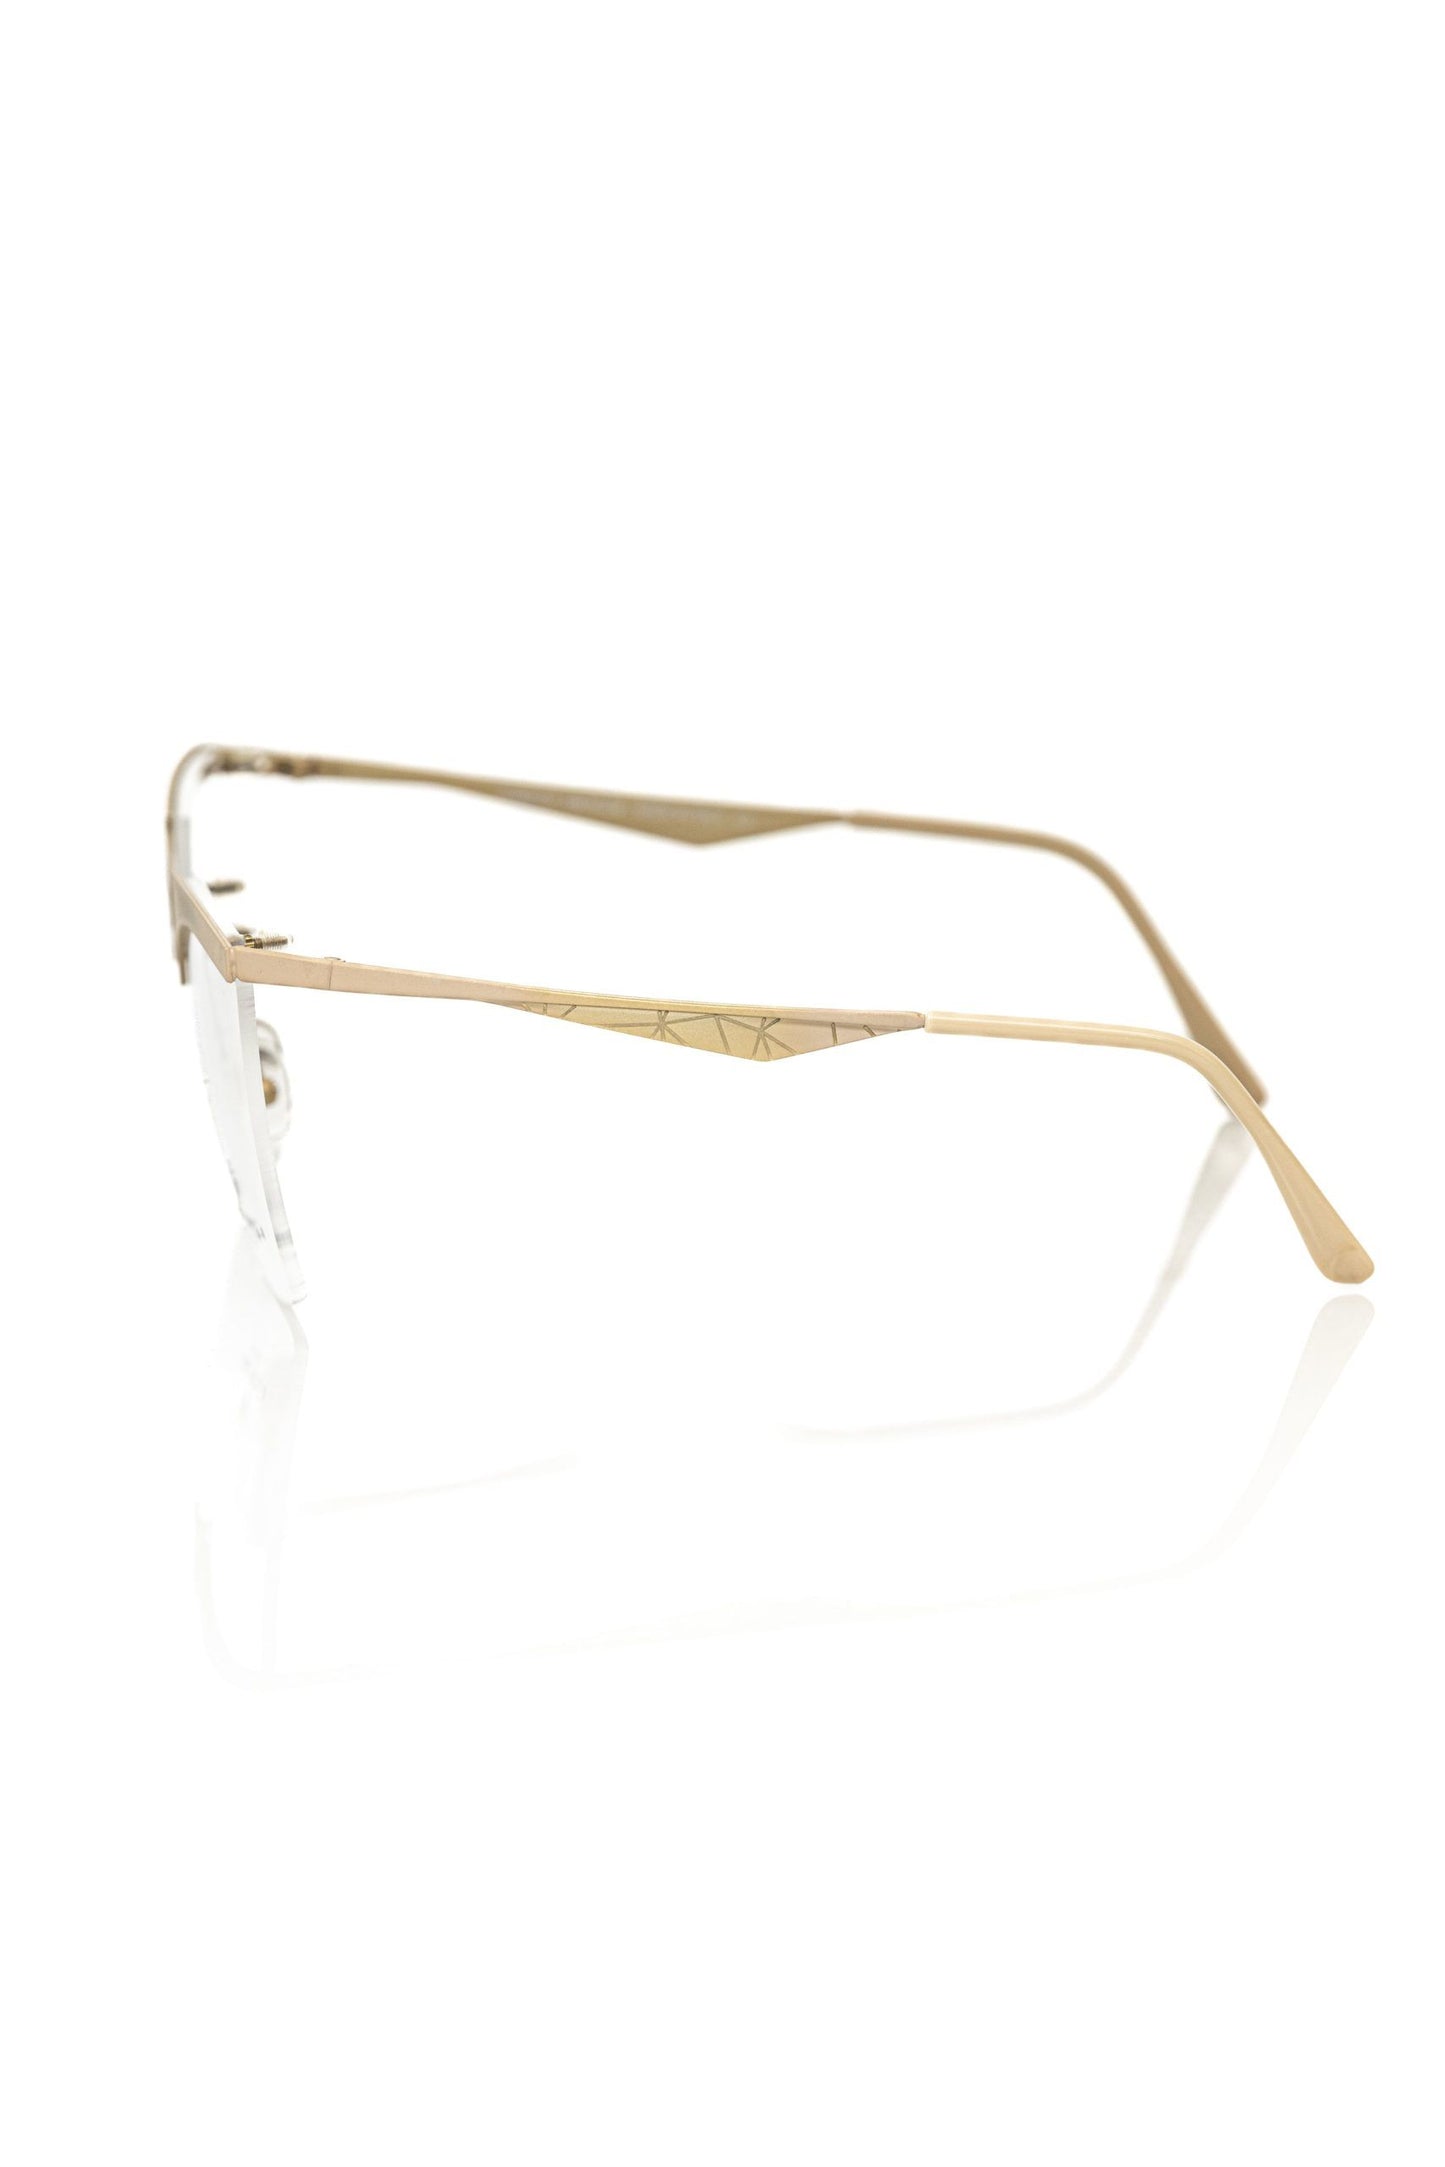 Frankie Morello Glitter Brown Clubmaster Eyeglass Frames